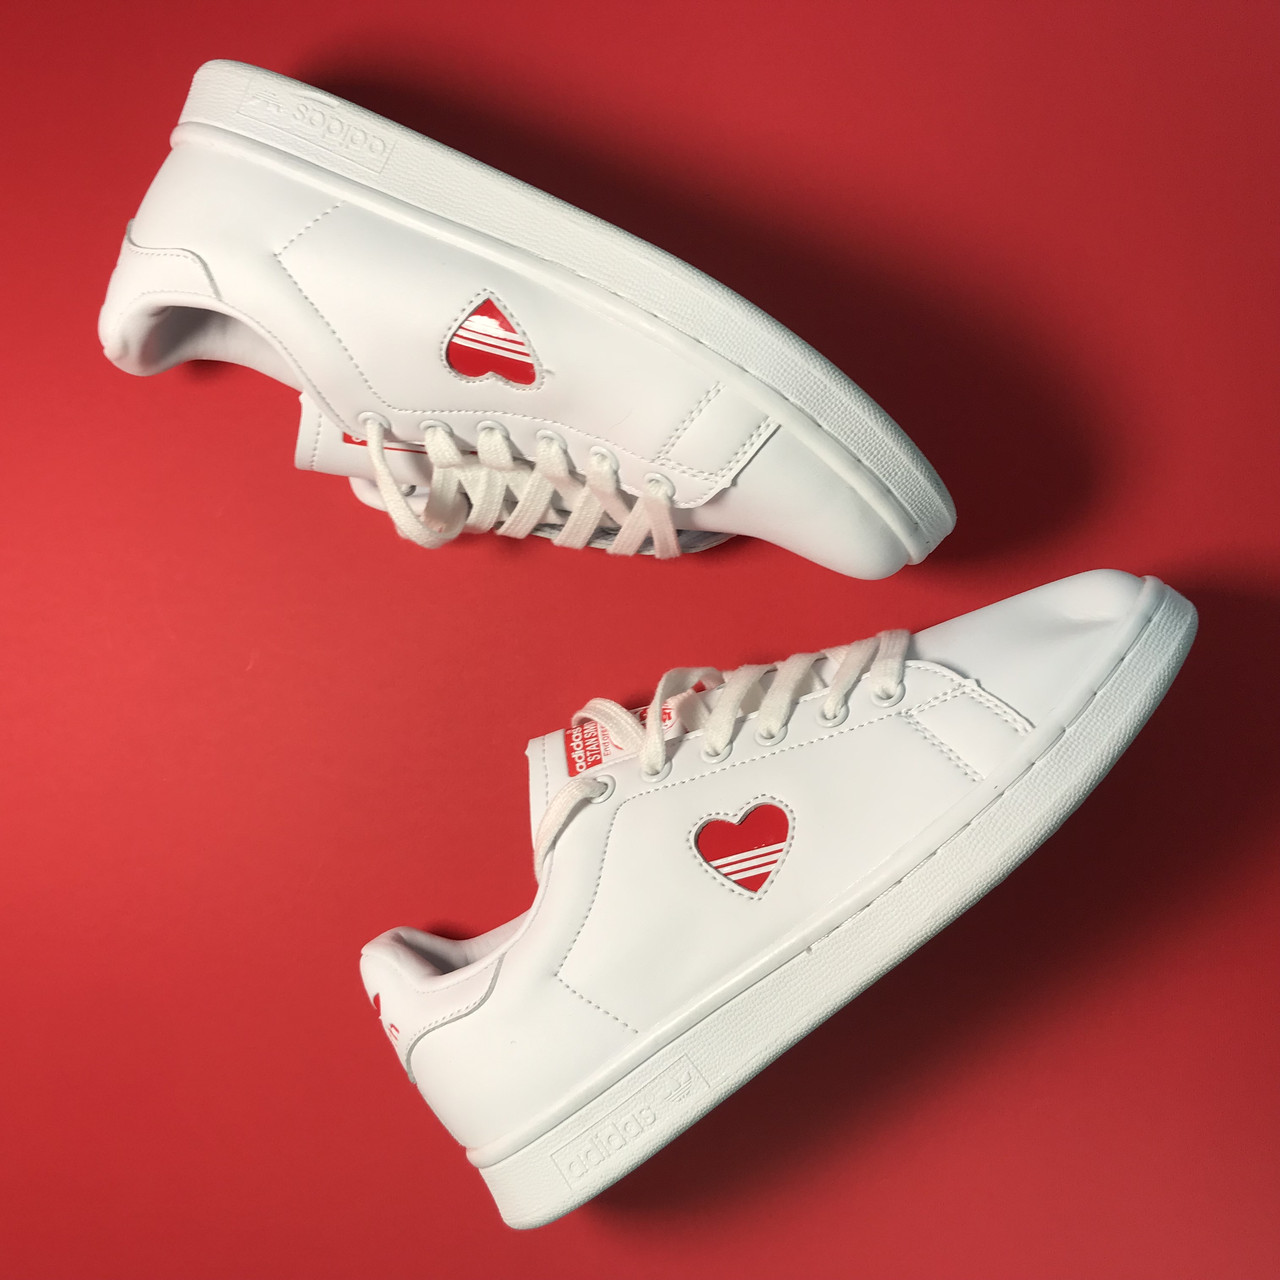 adidas stan smith white red heart